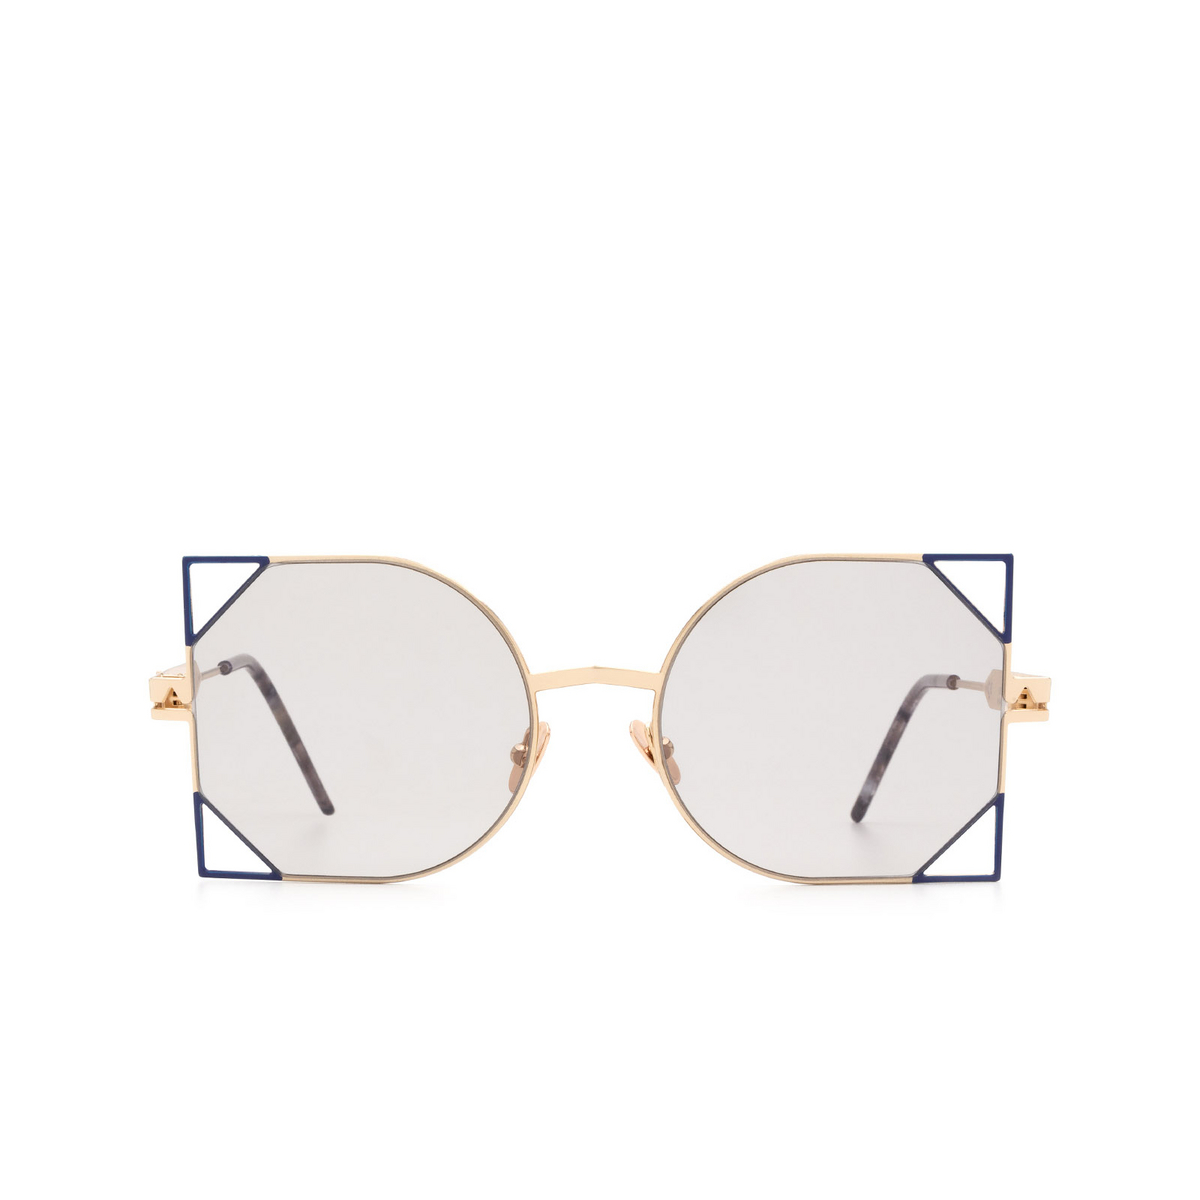 Soya® Irregular Sunglasses: Rania color Shiny Gold Rose & Shiny Navy Ngr-lg - front view.